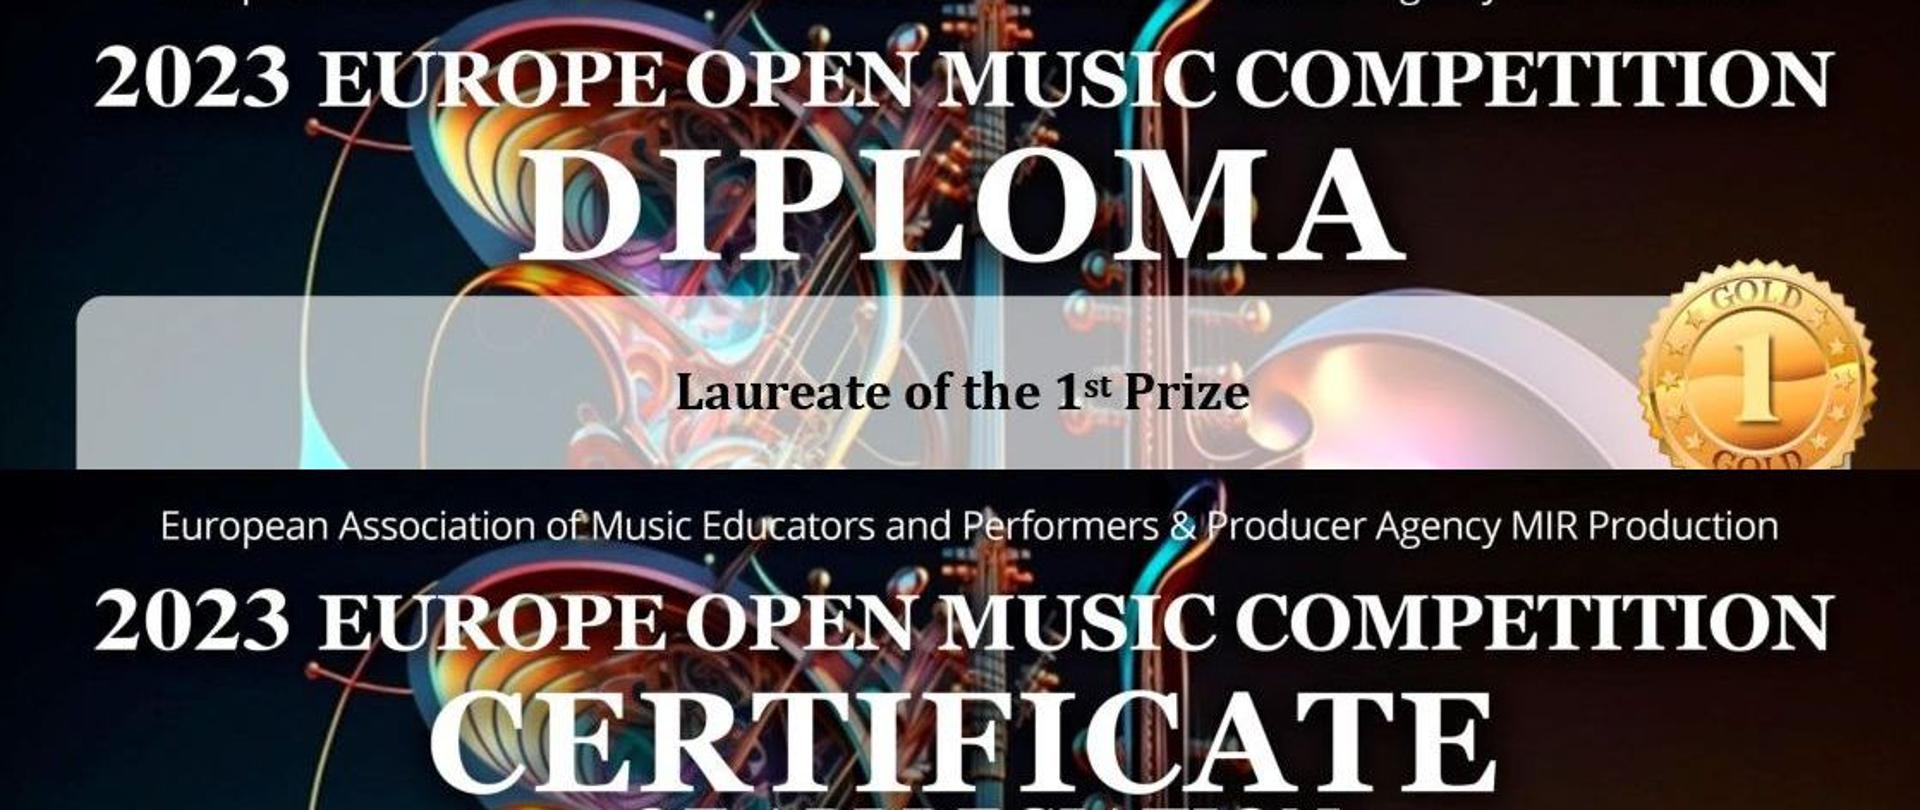 2023 EUROPE OPEN MUSIC COMPETITION - fragmenty dyplomów tworzą banerek konkursu.